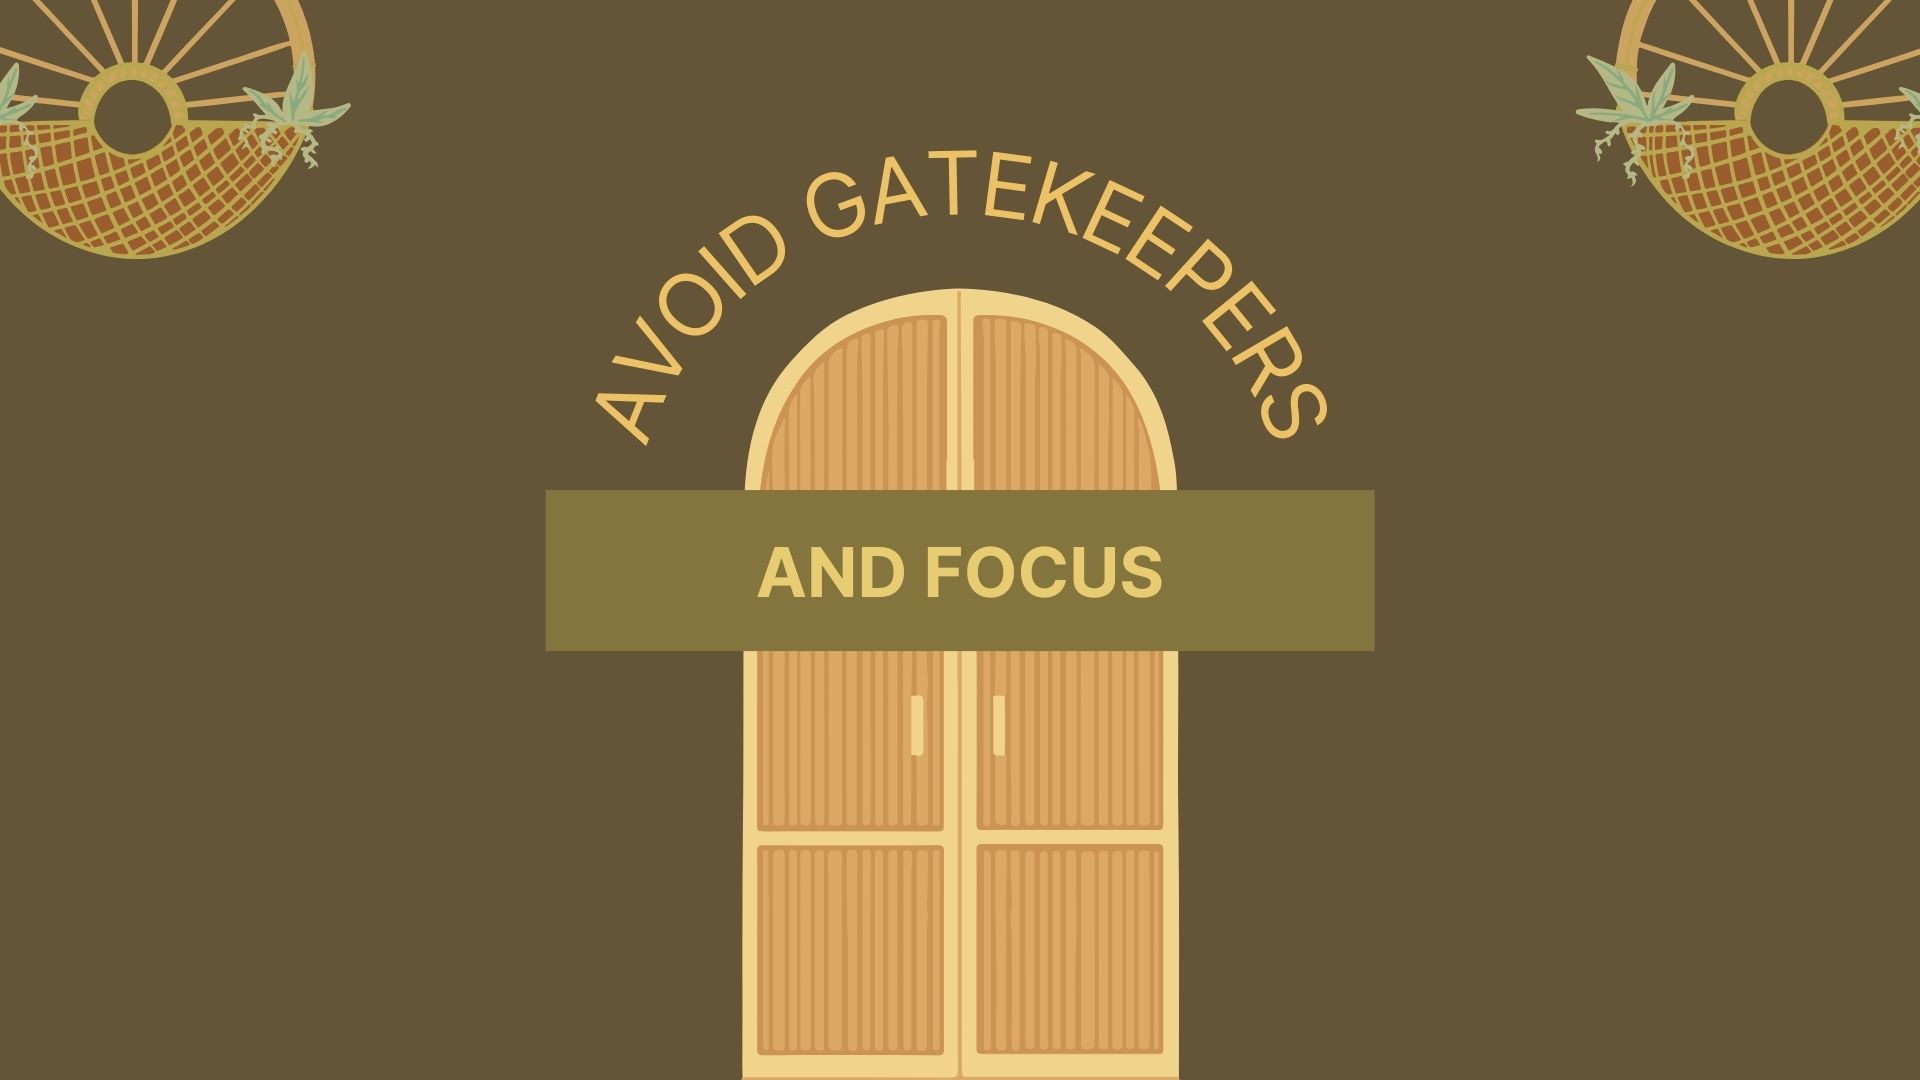 Avoid gatekeepers, and focus